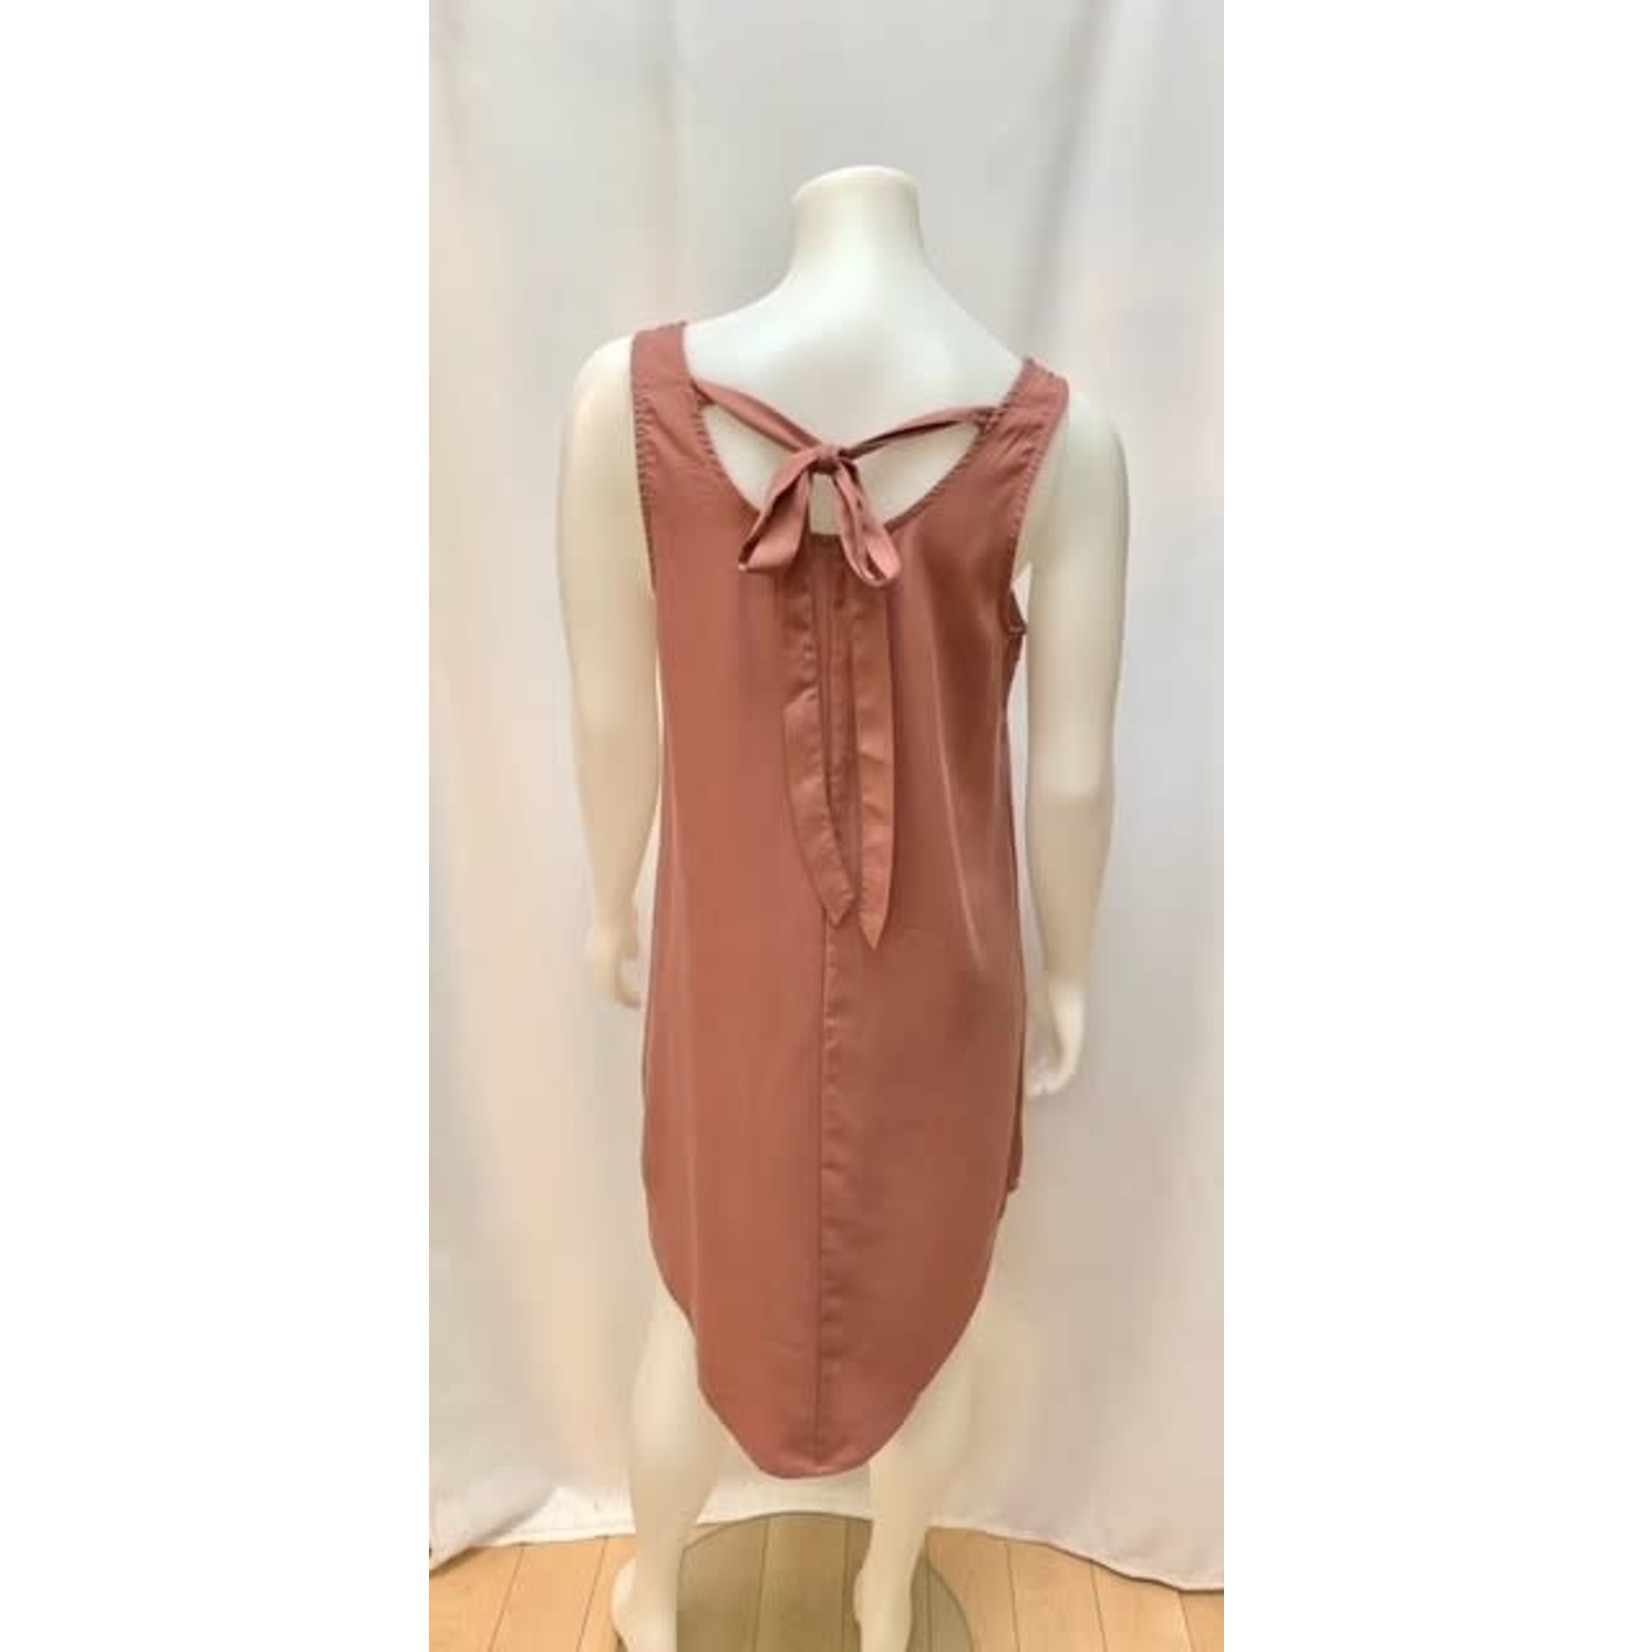 DKR & Co Sleeveless dress w/back tie detail